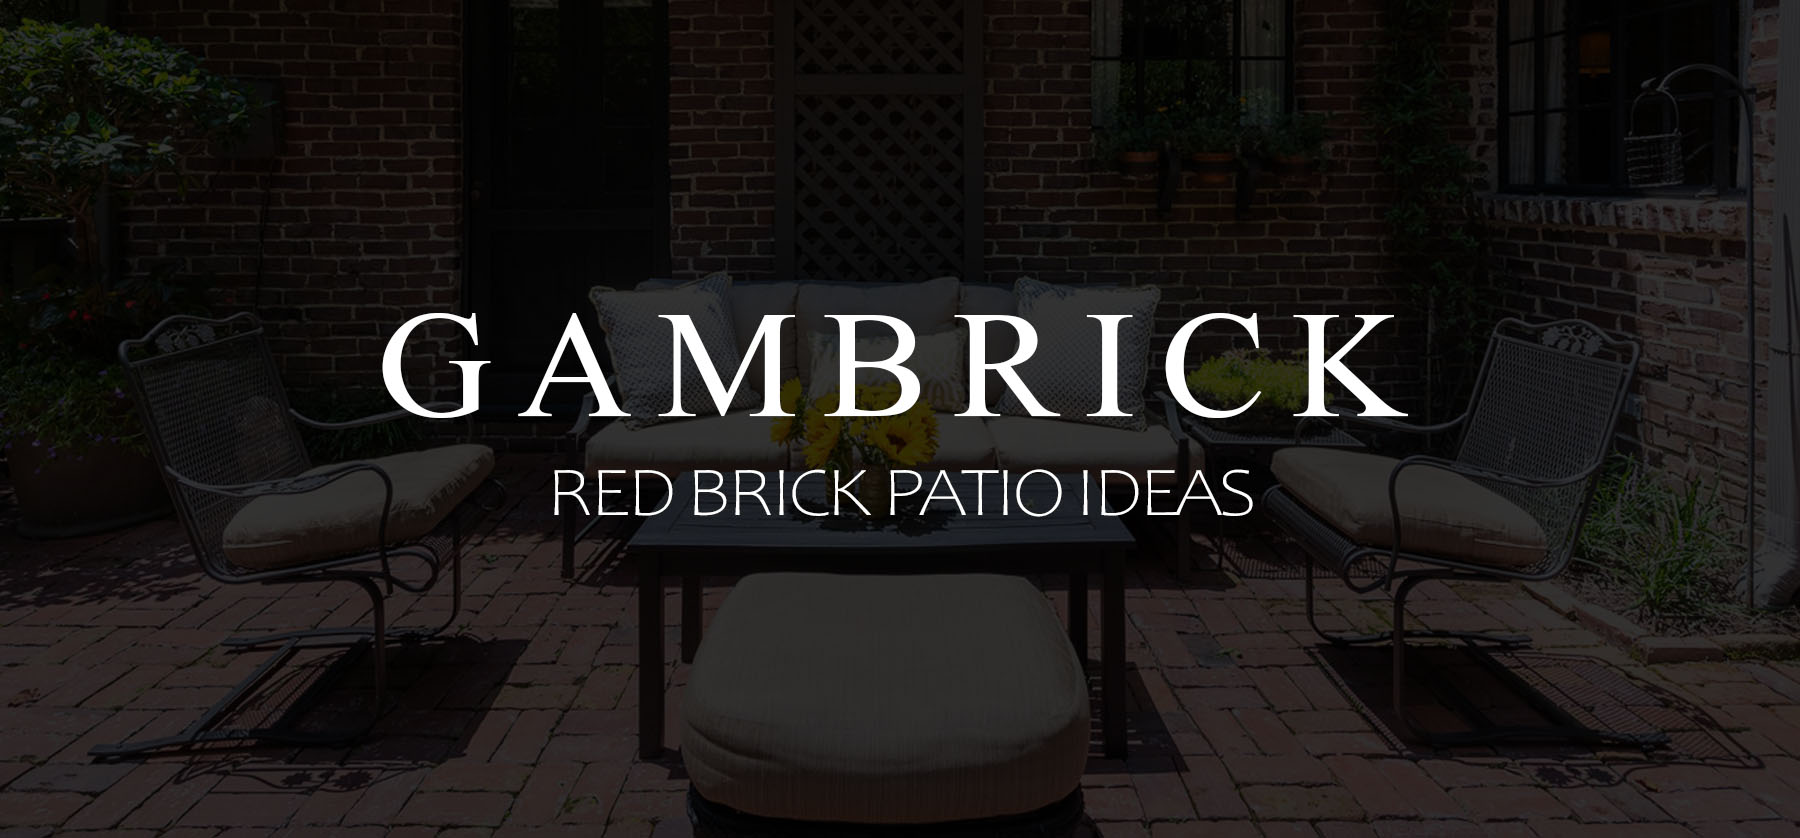 Red brick patio ideas banner 1